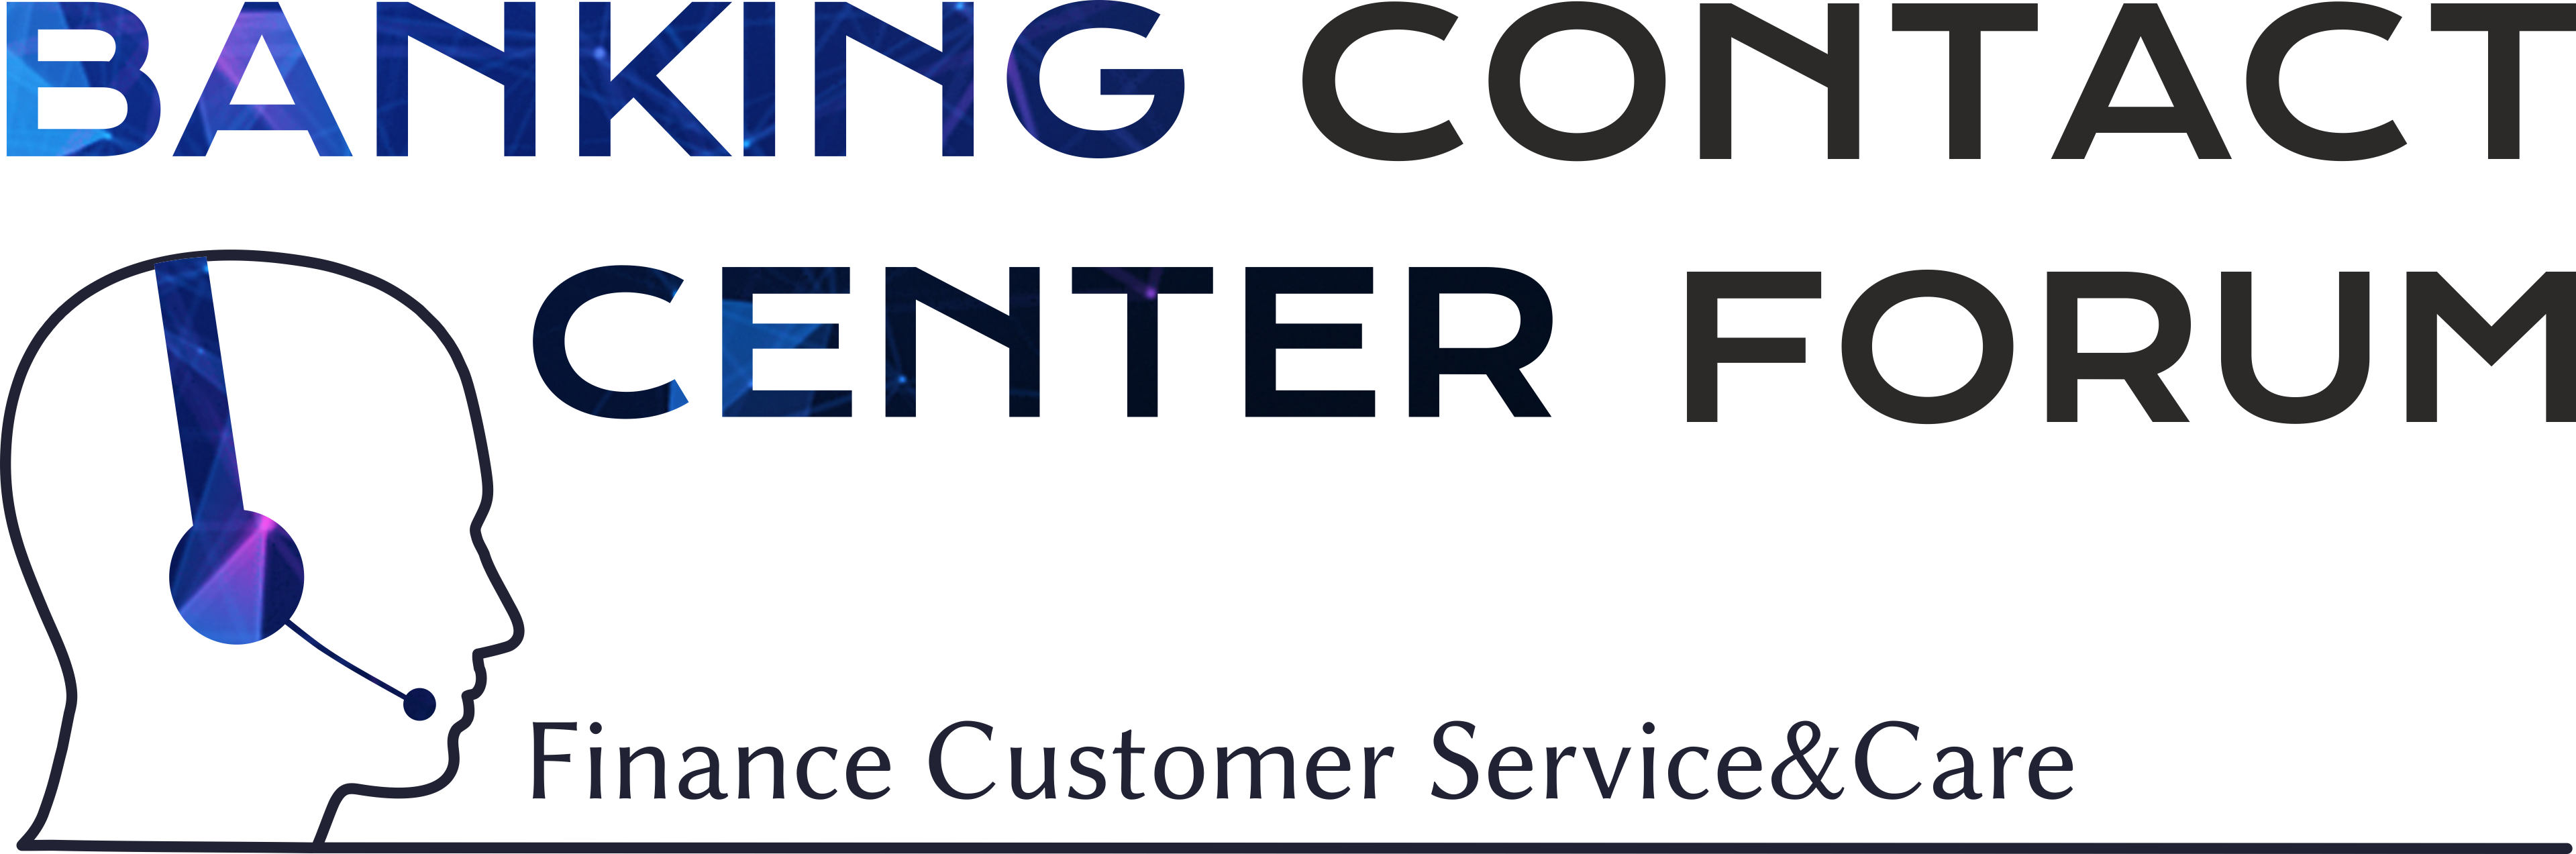 Banking Contact Center Forum 2018